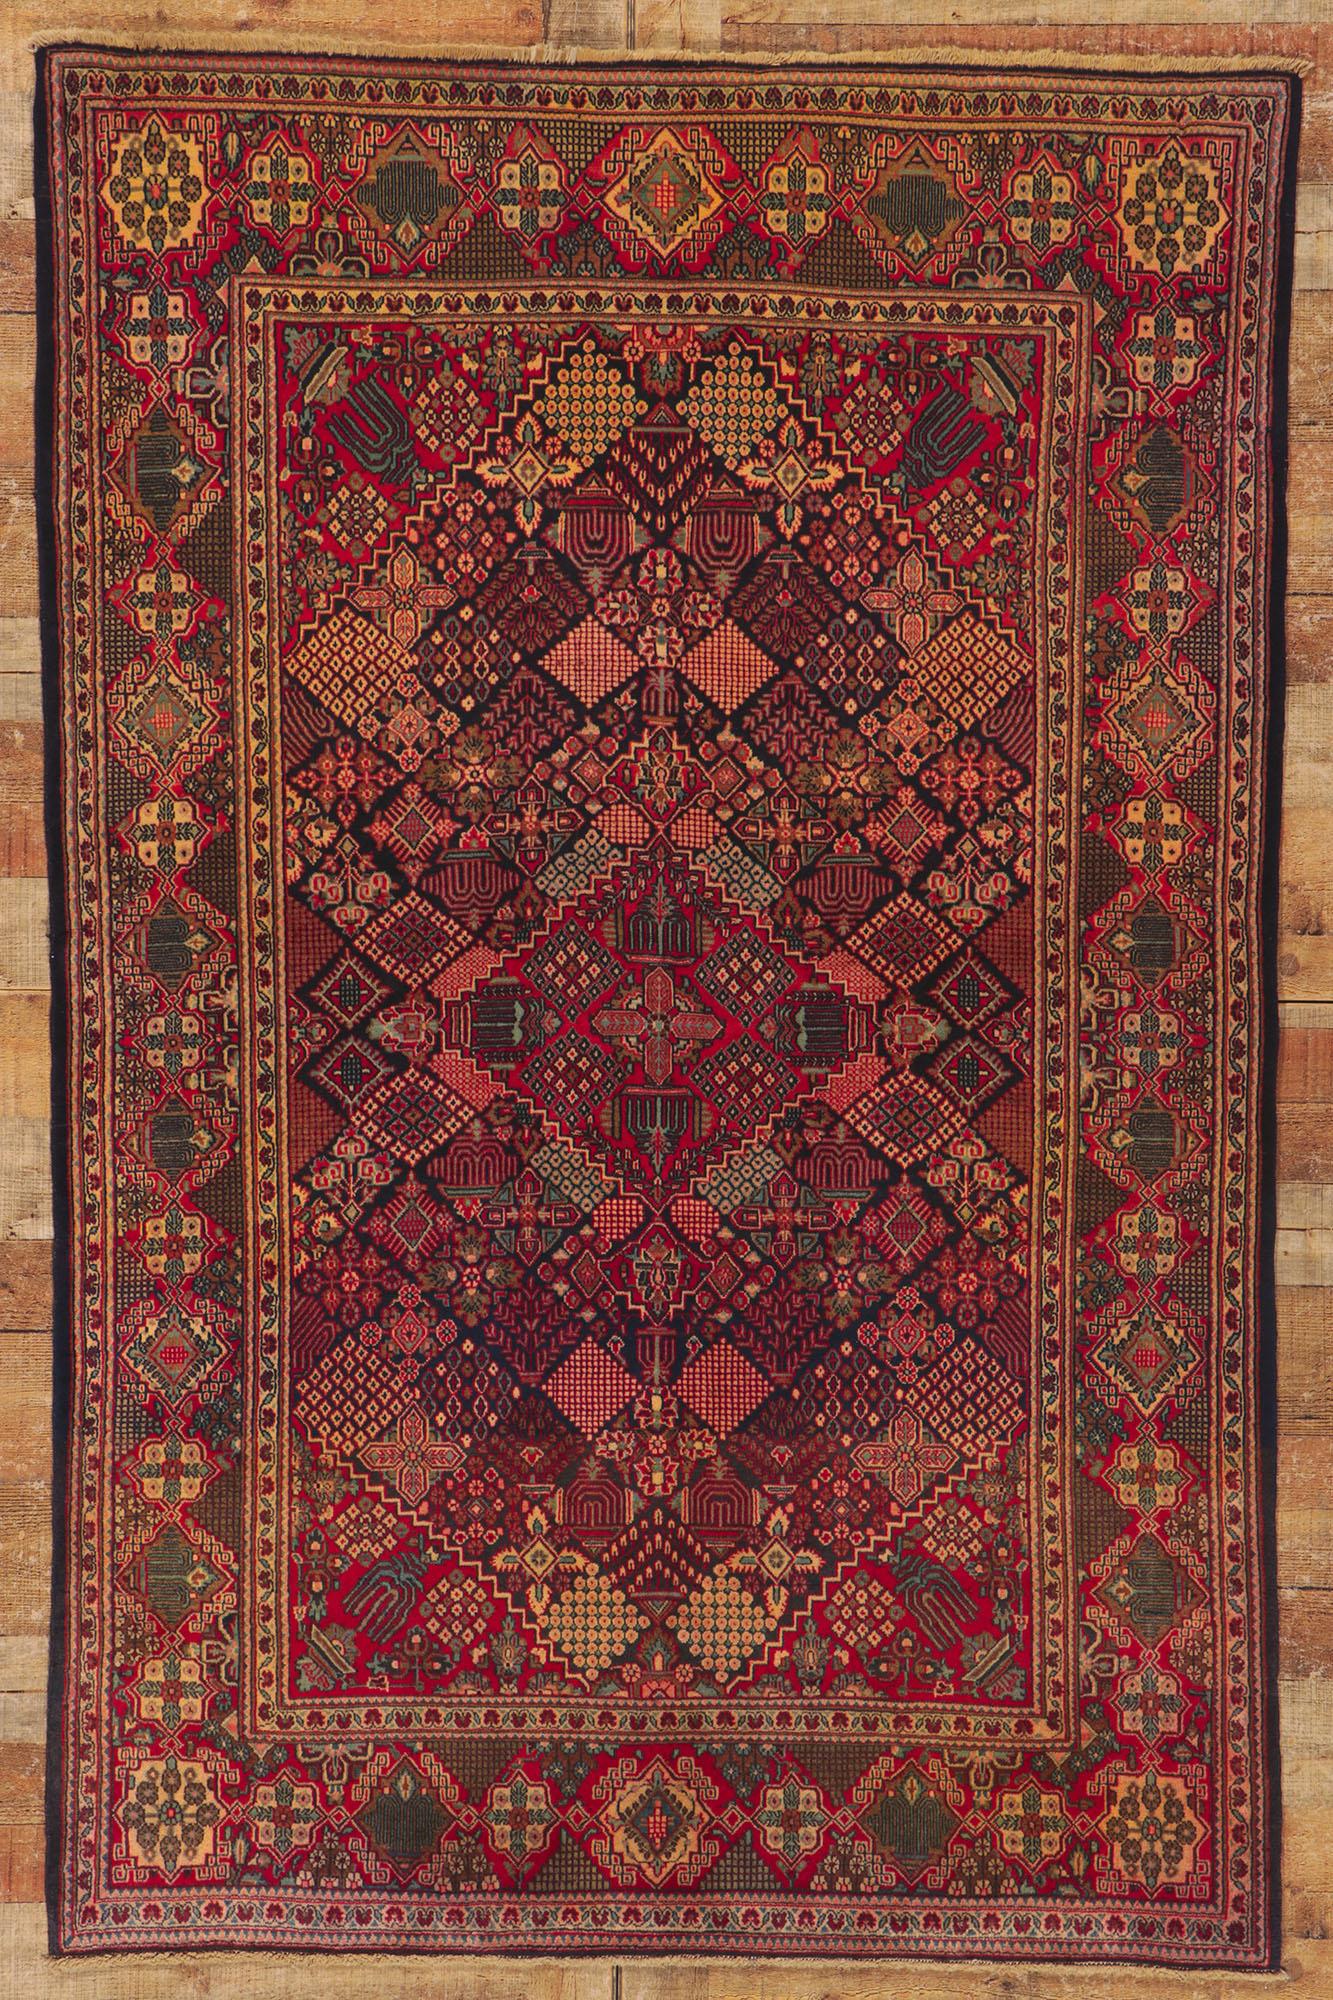 Antique Persian Kashan Rug with Joshegan Diamond Design and Jewel-Tone Colors For Sale 2